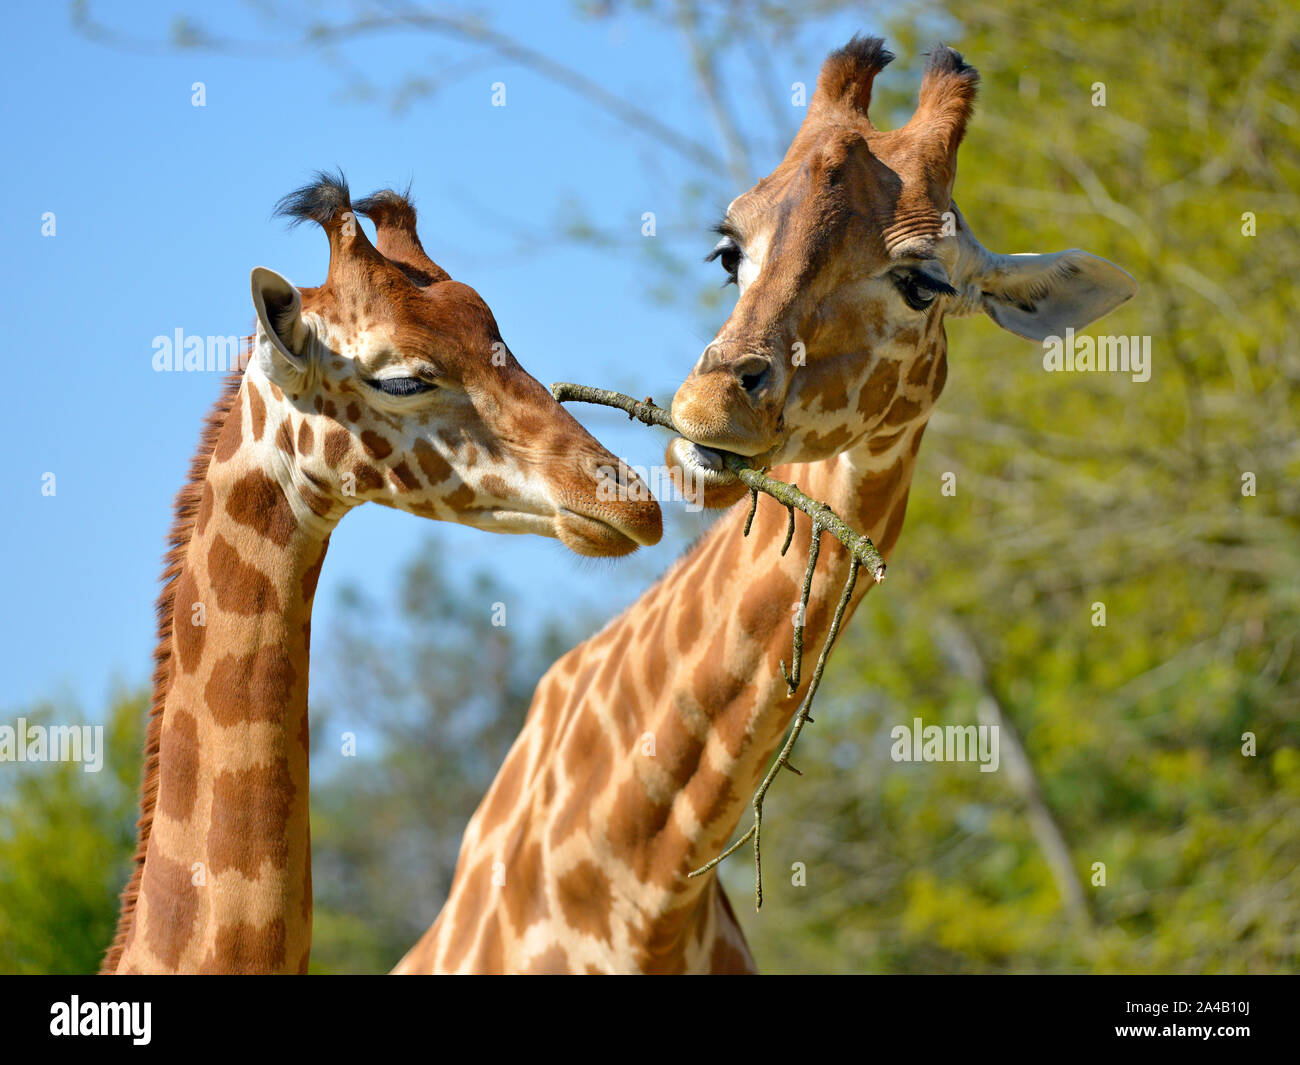 Closeup of two giraffes (Giraffa camelopardalis) eating a twig Stock Photo